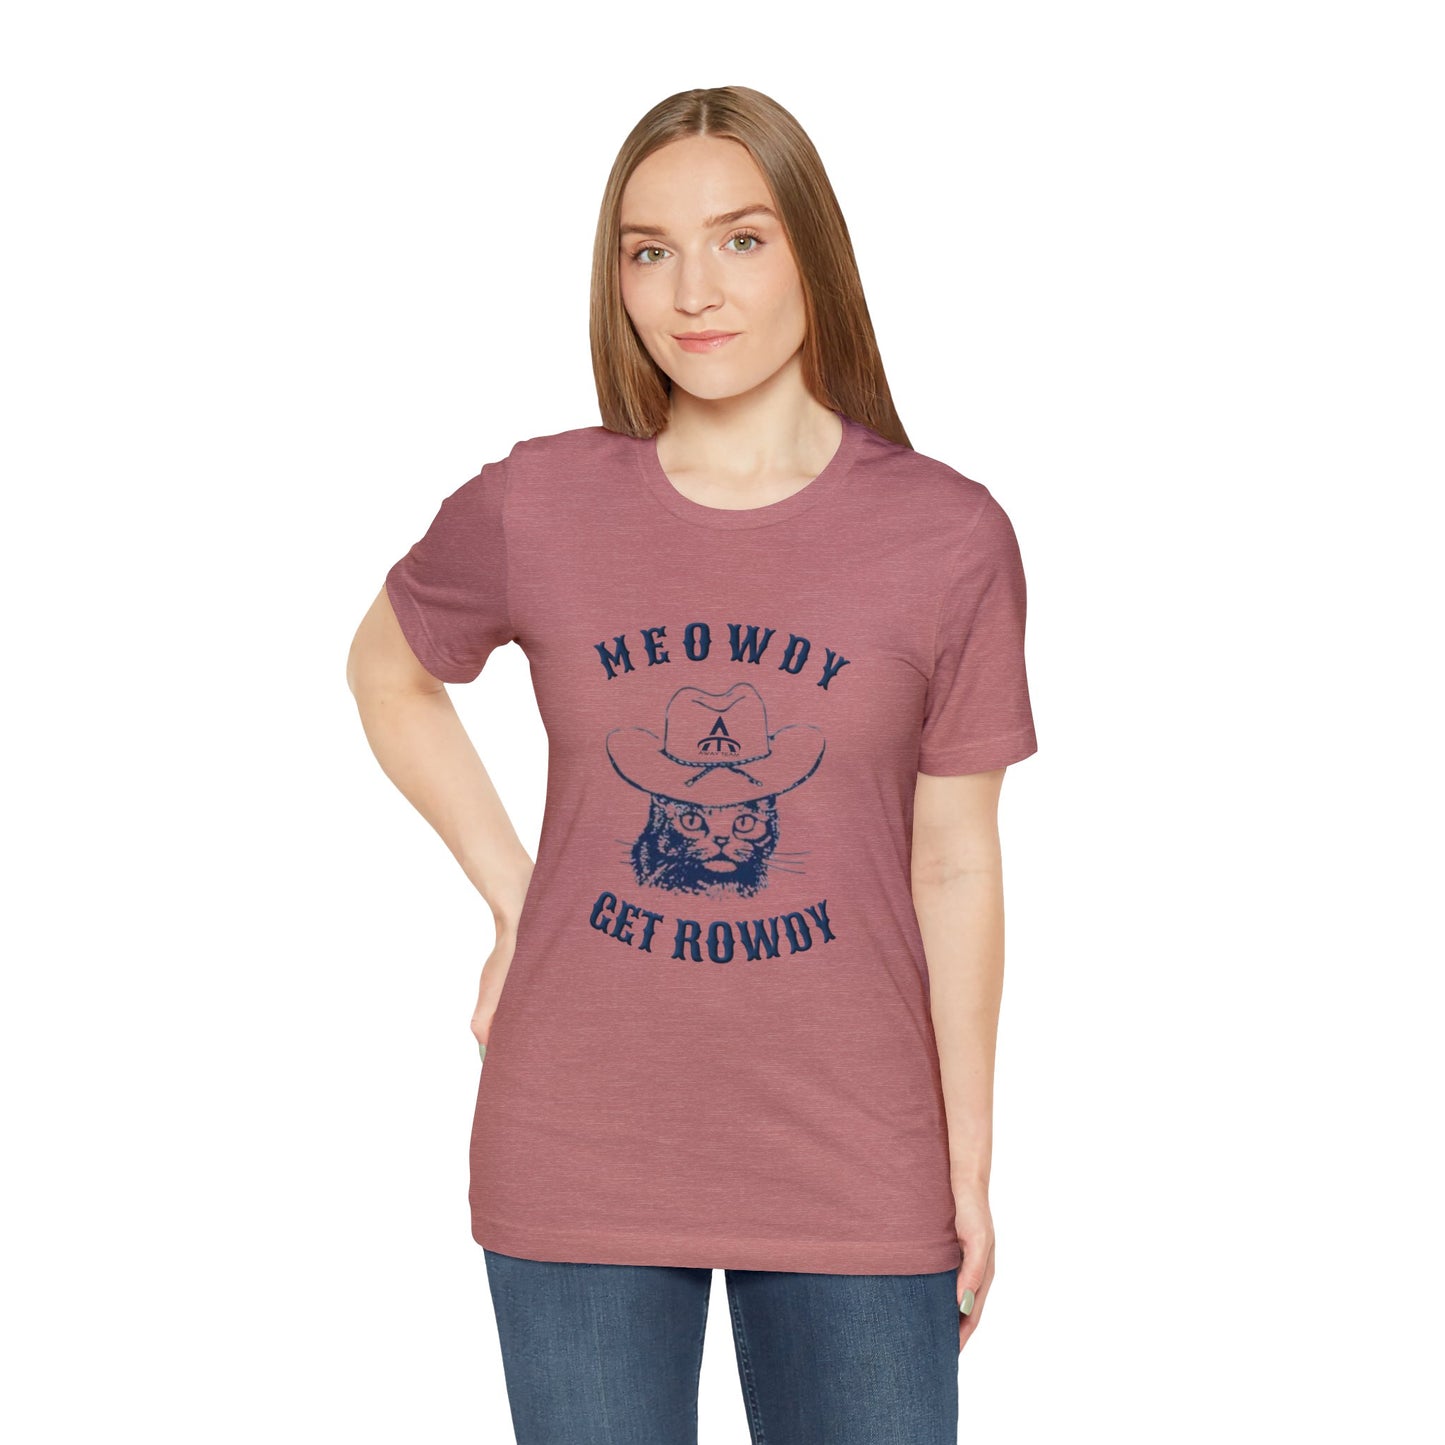 MEOWDY - GET ROWDY Away Team Doc's Shirt